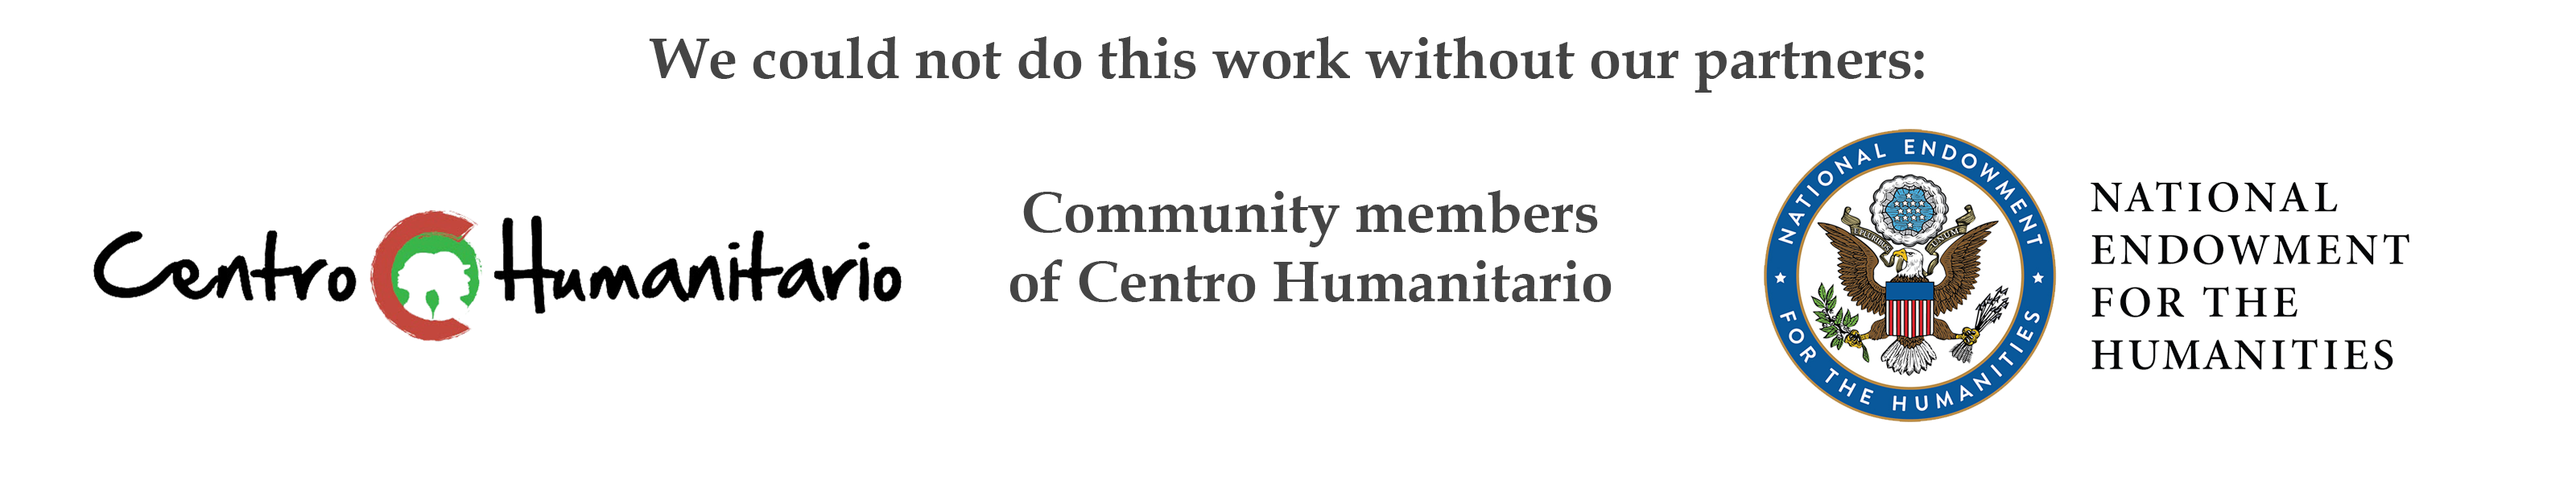 Centro Humanitario partners